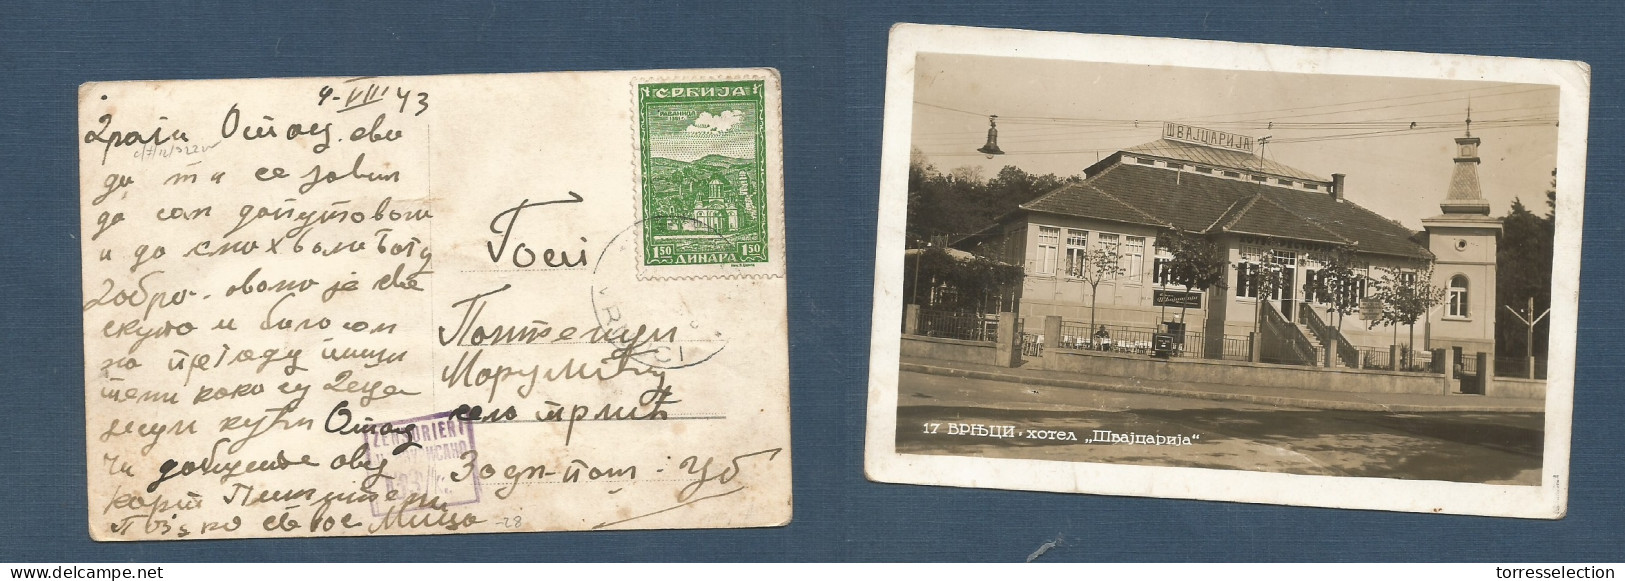 SERBIA. 1943 (4 Aug) Vrnuci Local WWII Censored Ppc. Interesting. Scarce Private Item Fkd 1,50p Green. XSALE. - Serbien